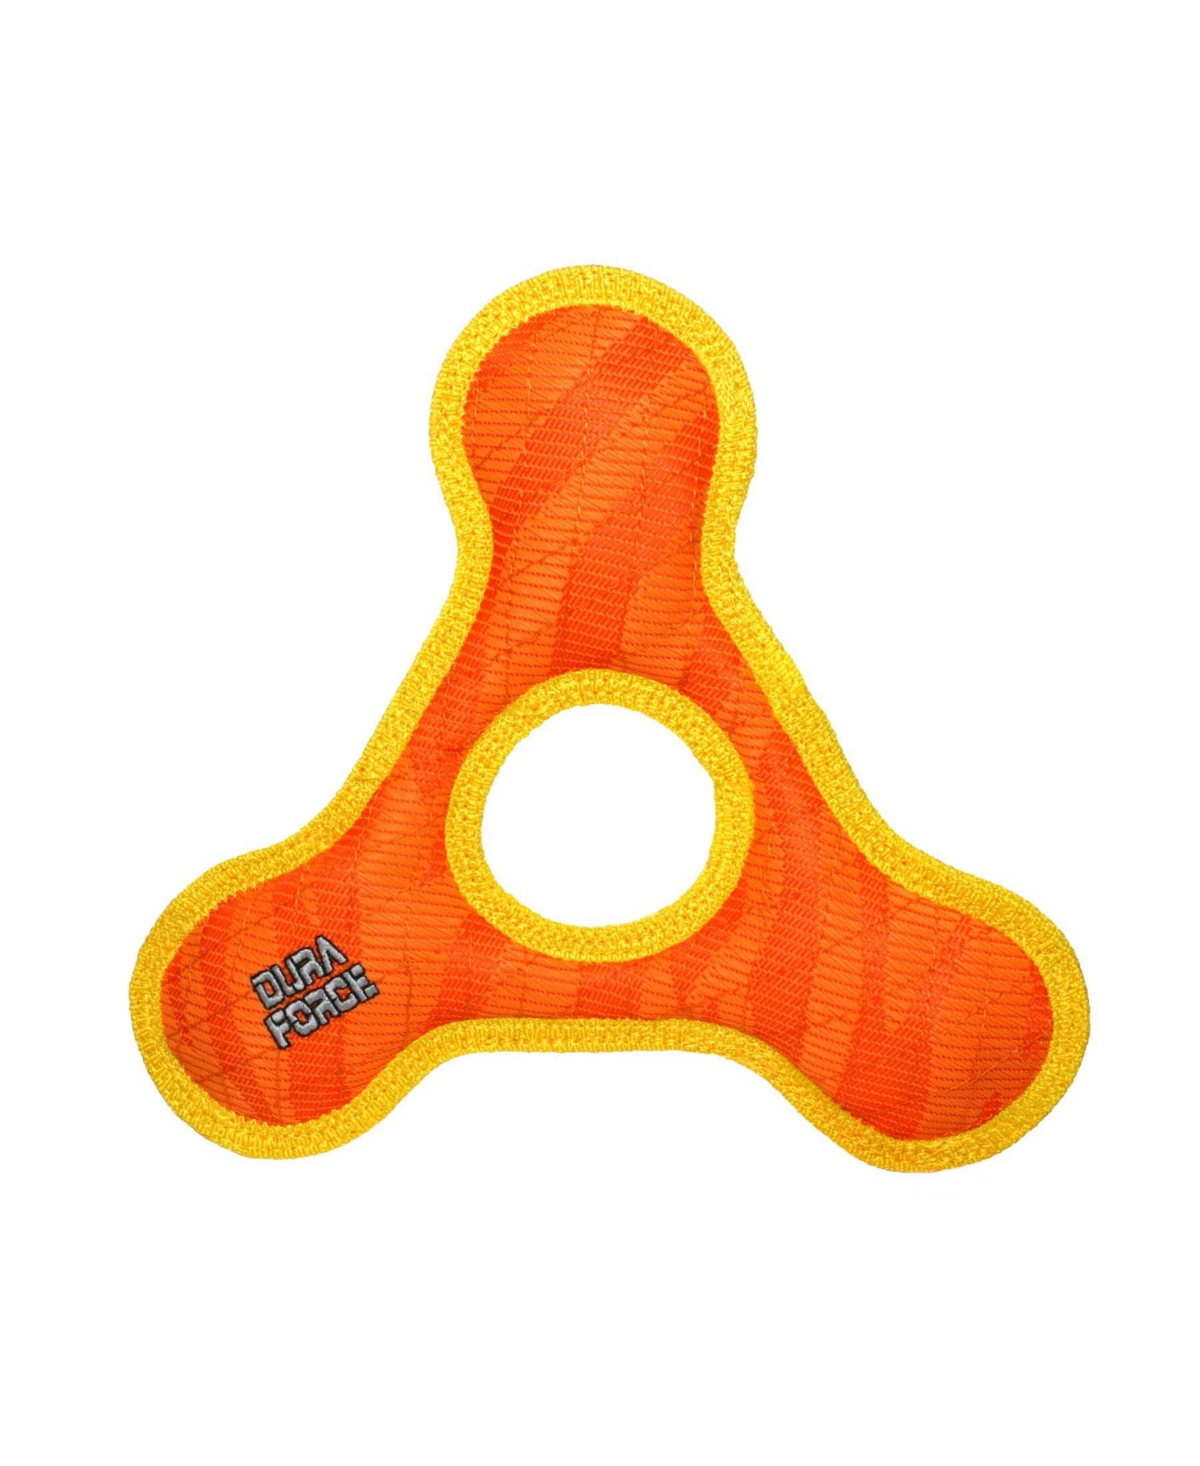 TriangleRing Tiger Orange-Yellow, Dog Toy - Bright Orange